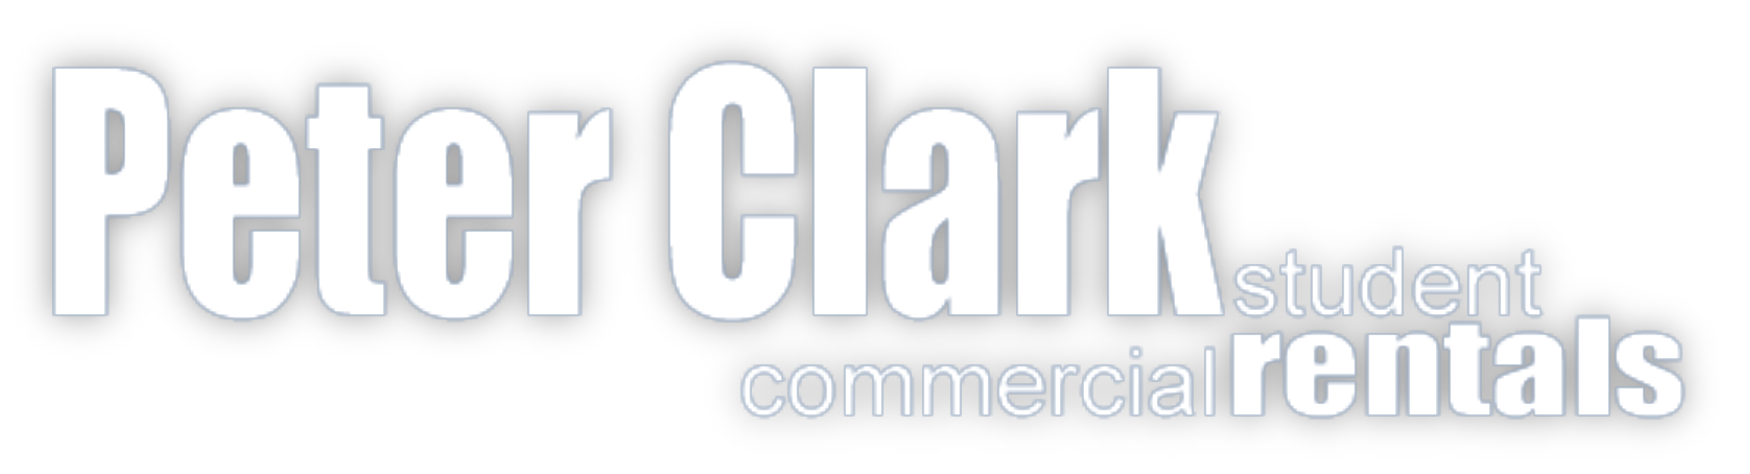 Peter Clark Student Rentals Header Logo - Select to go home